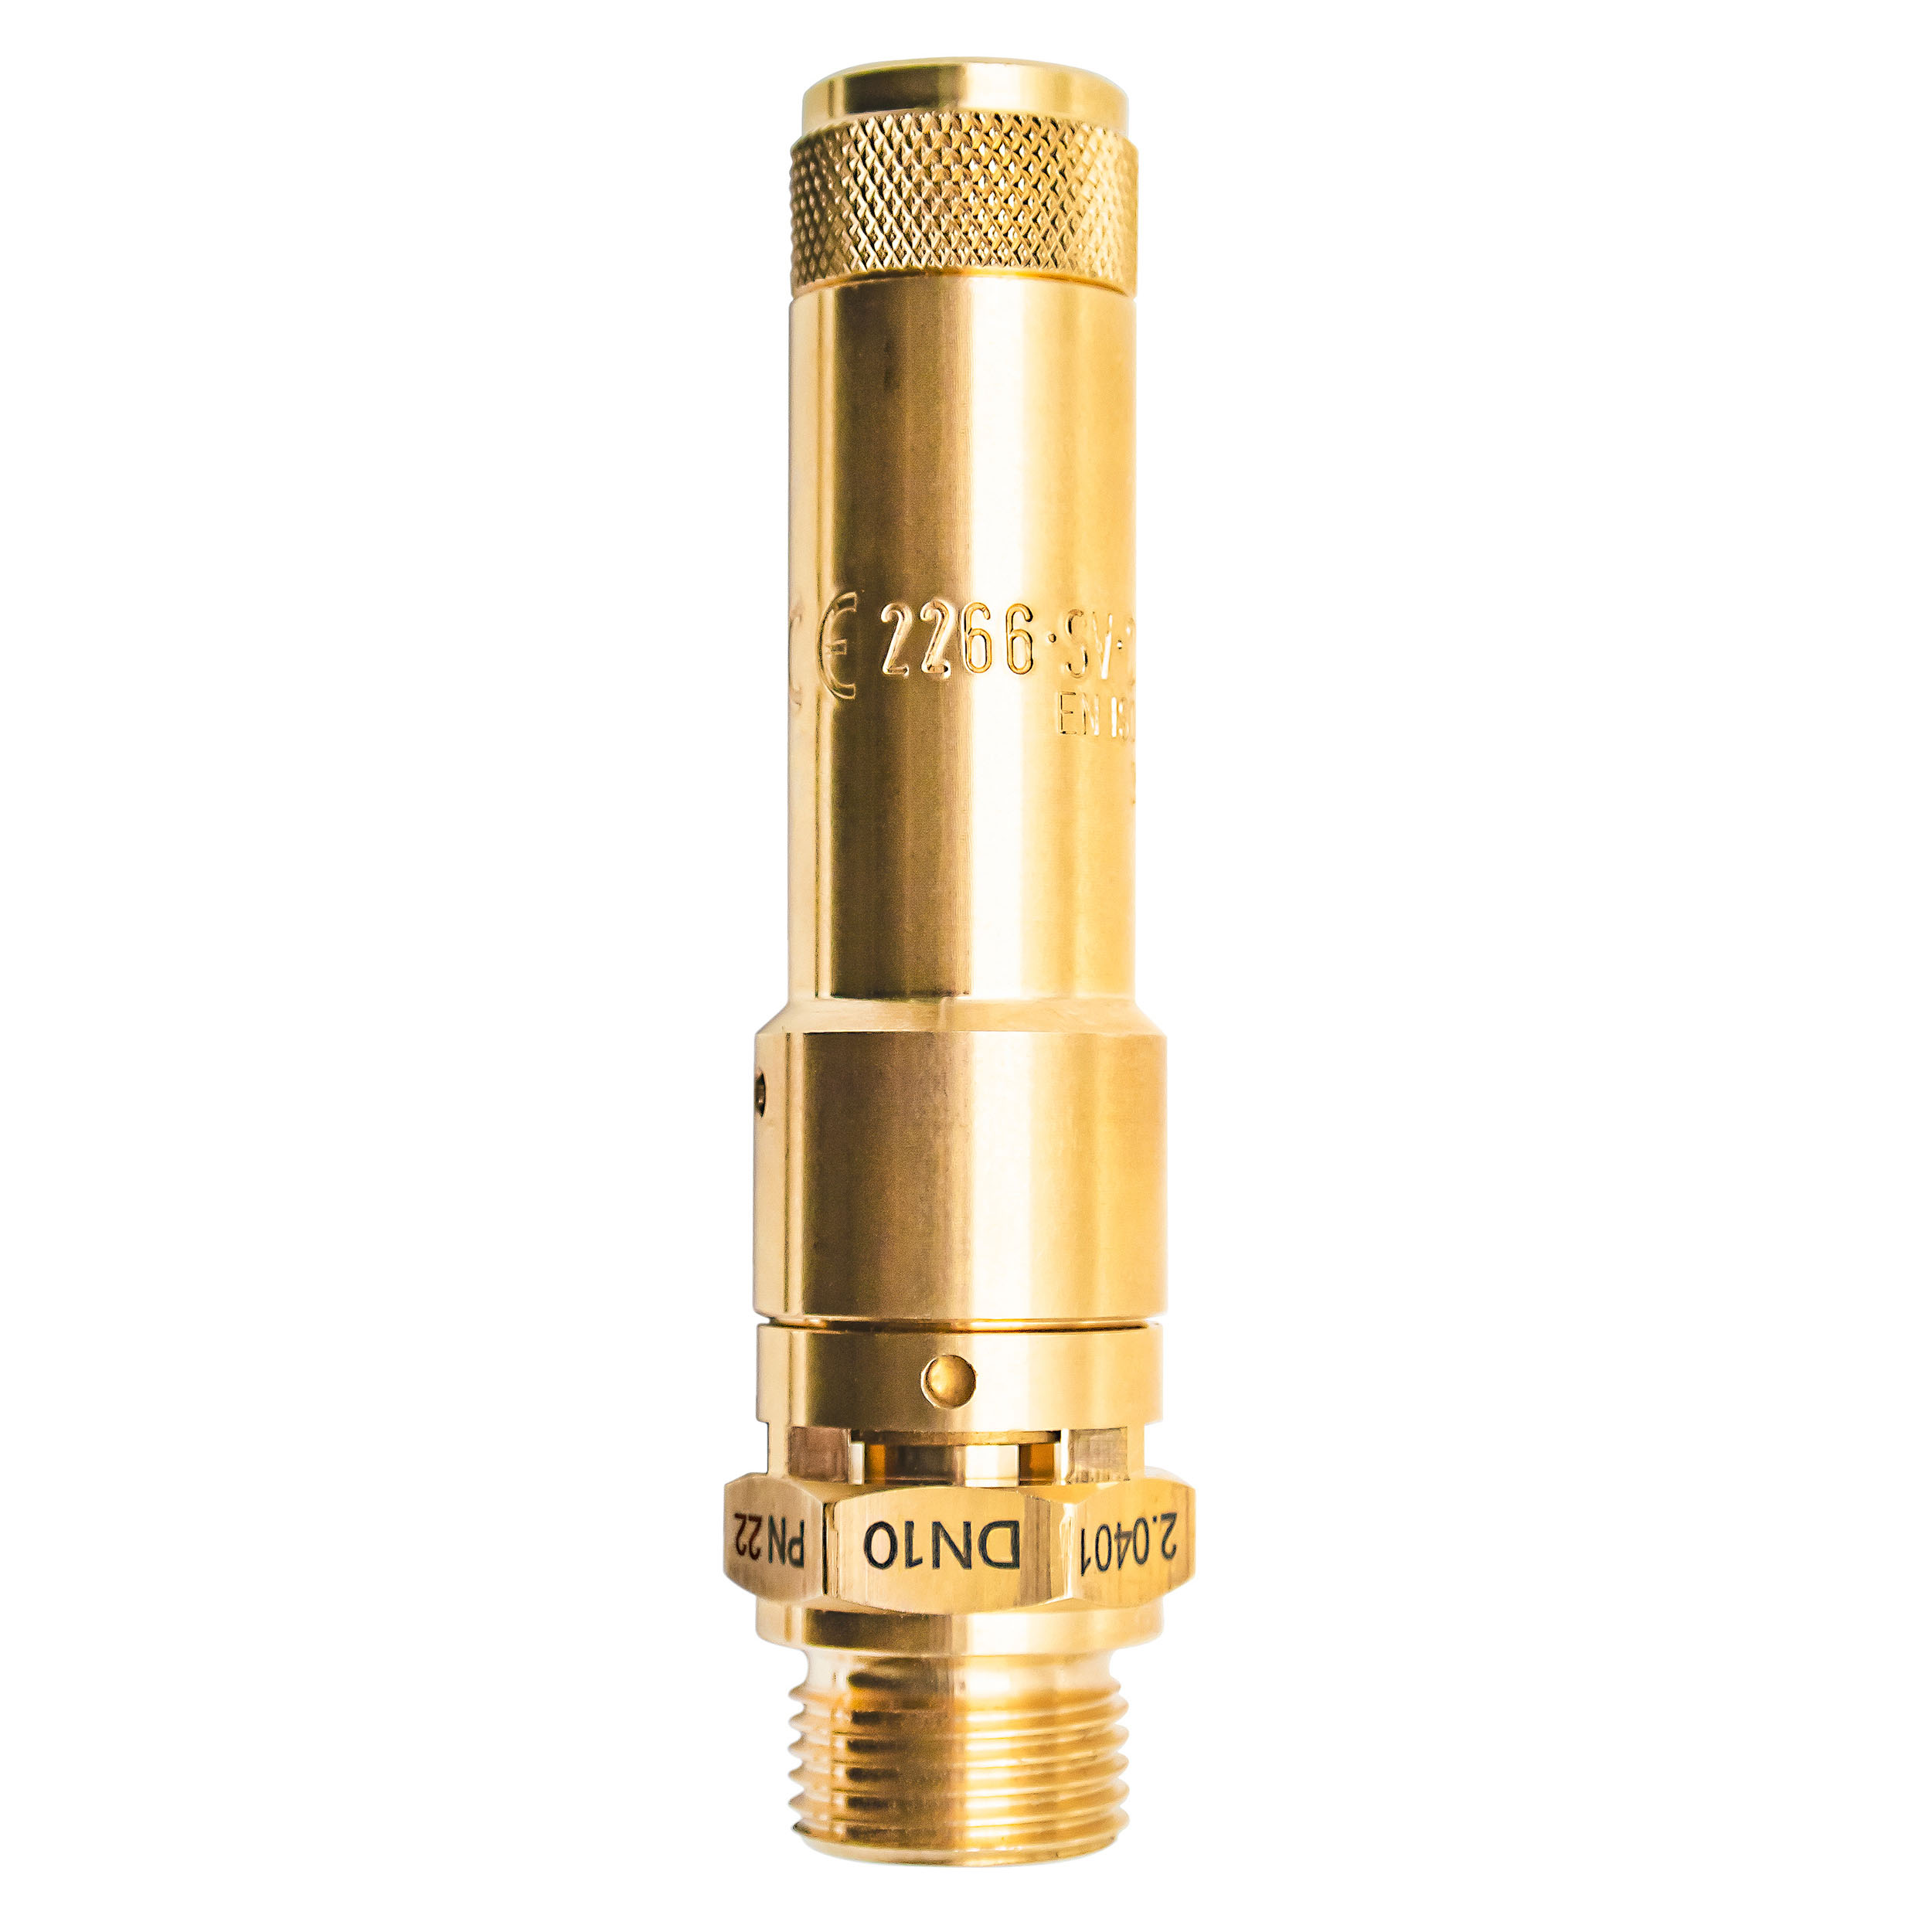 Component-tested safety valve DN 10, G½, pressure: 7.1-8.5 bar